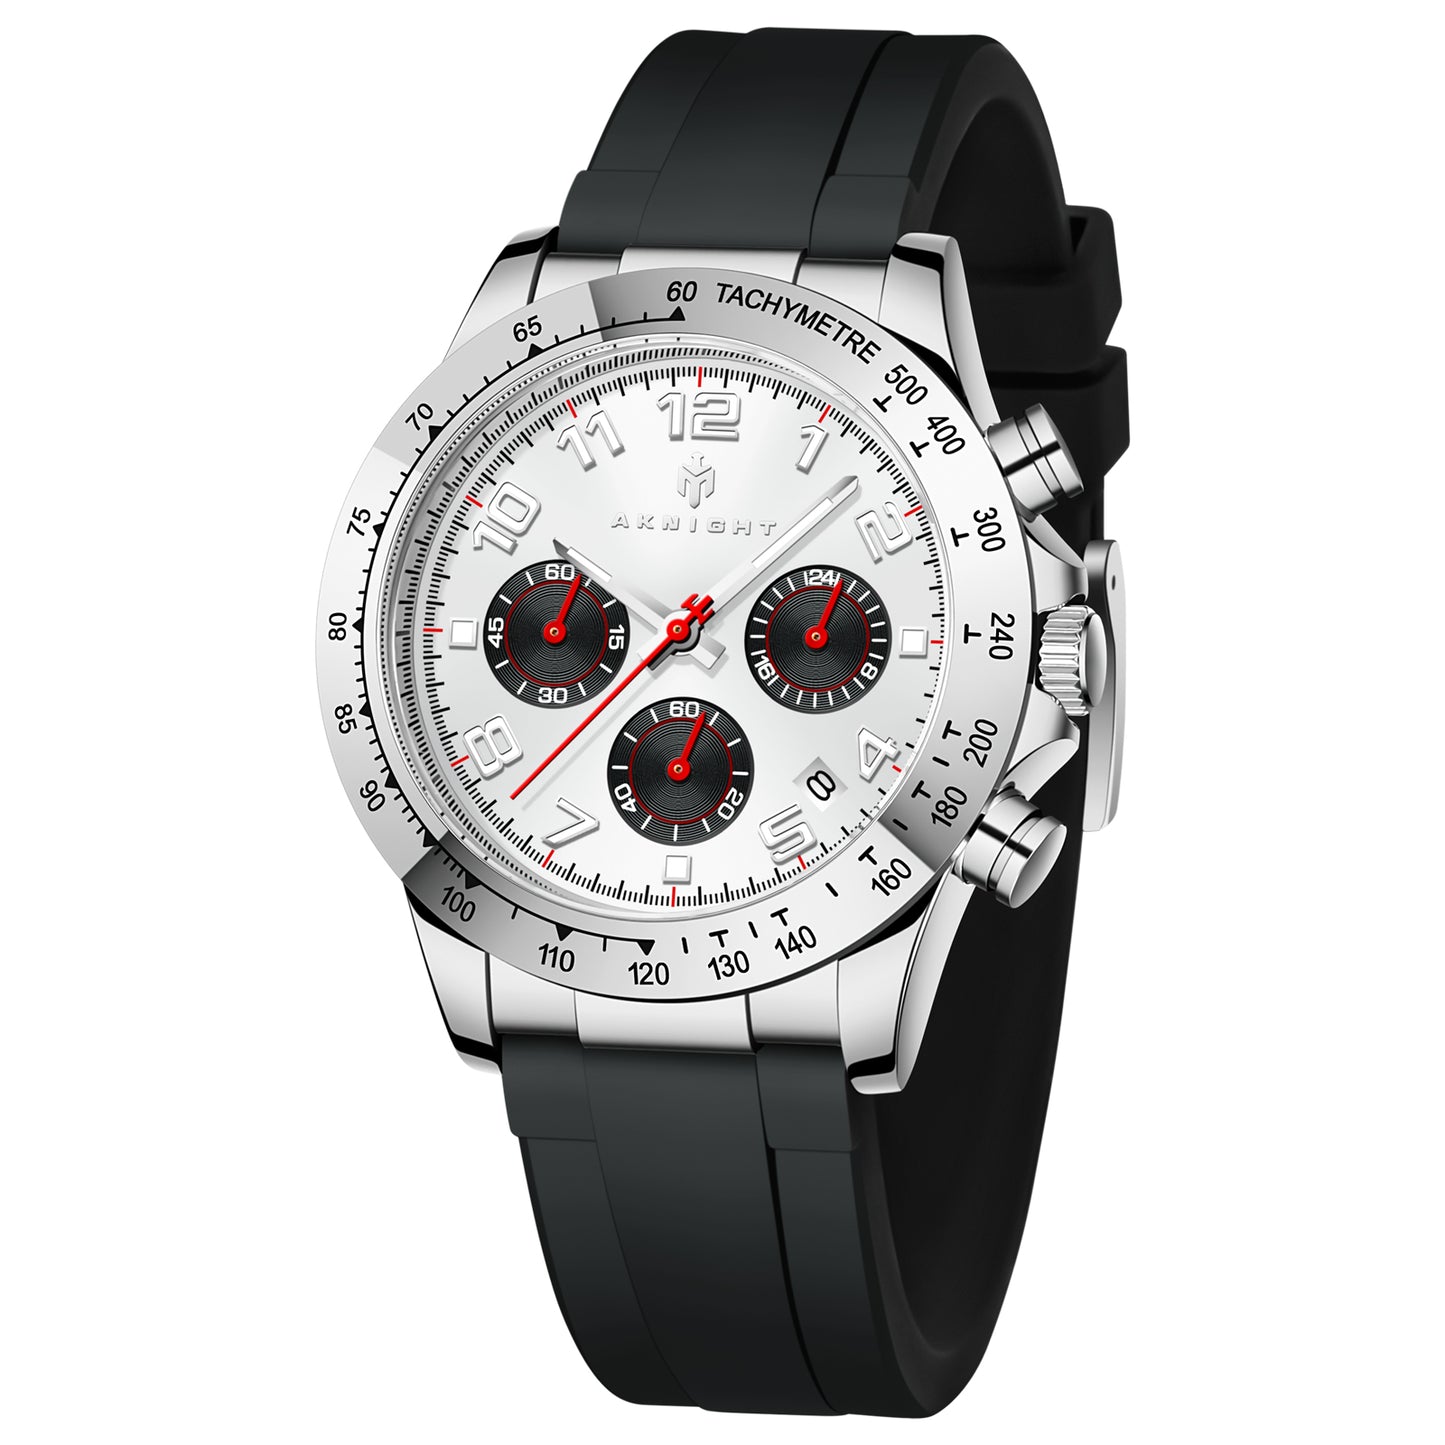 AKNIGHT™ Fashion men's watch chronograph 30 meters waterproof casual business watch.